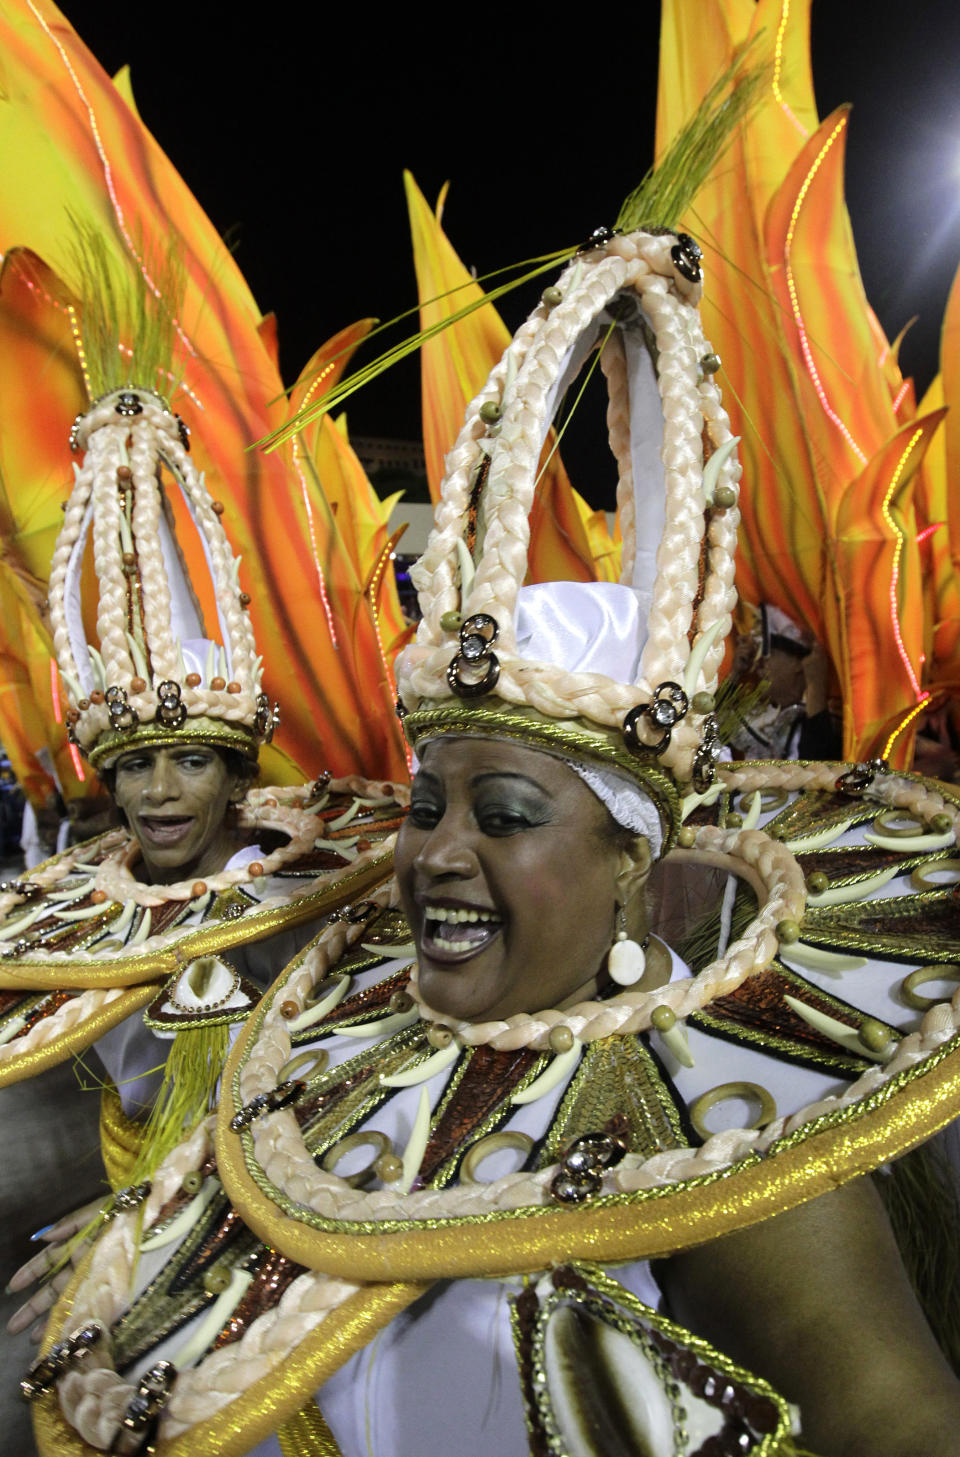 Performers from the Imperio da Tijuca samba school parade during carnival celebrations at the Sambadrome in Rio de Janeiro, Brazil, Sunday, March 2, 2014. (AP Photo/Silvia Izquierdo)